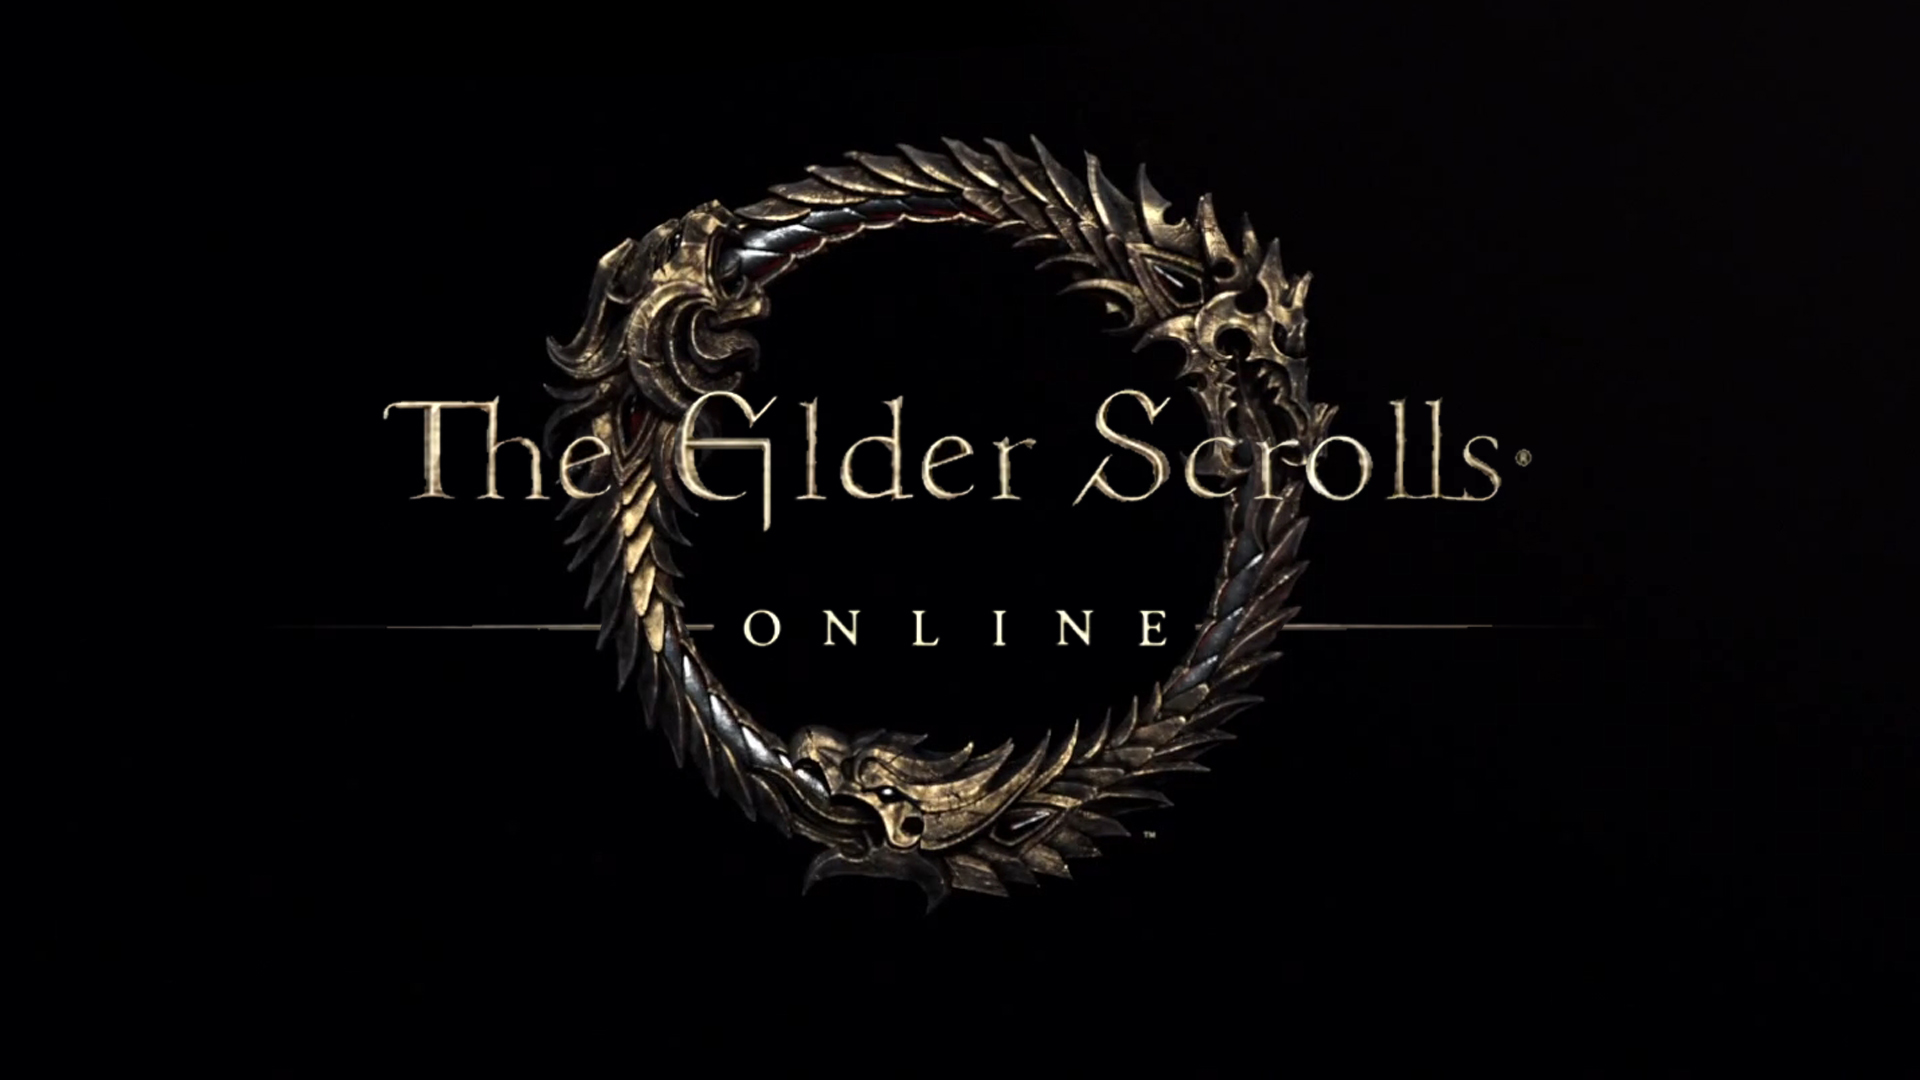 The Elder Scrolls Online / Online Epic Games / Full Access / Warranty / Inactive / Gift